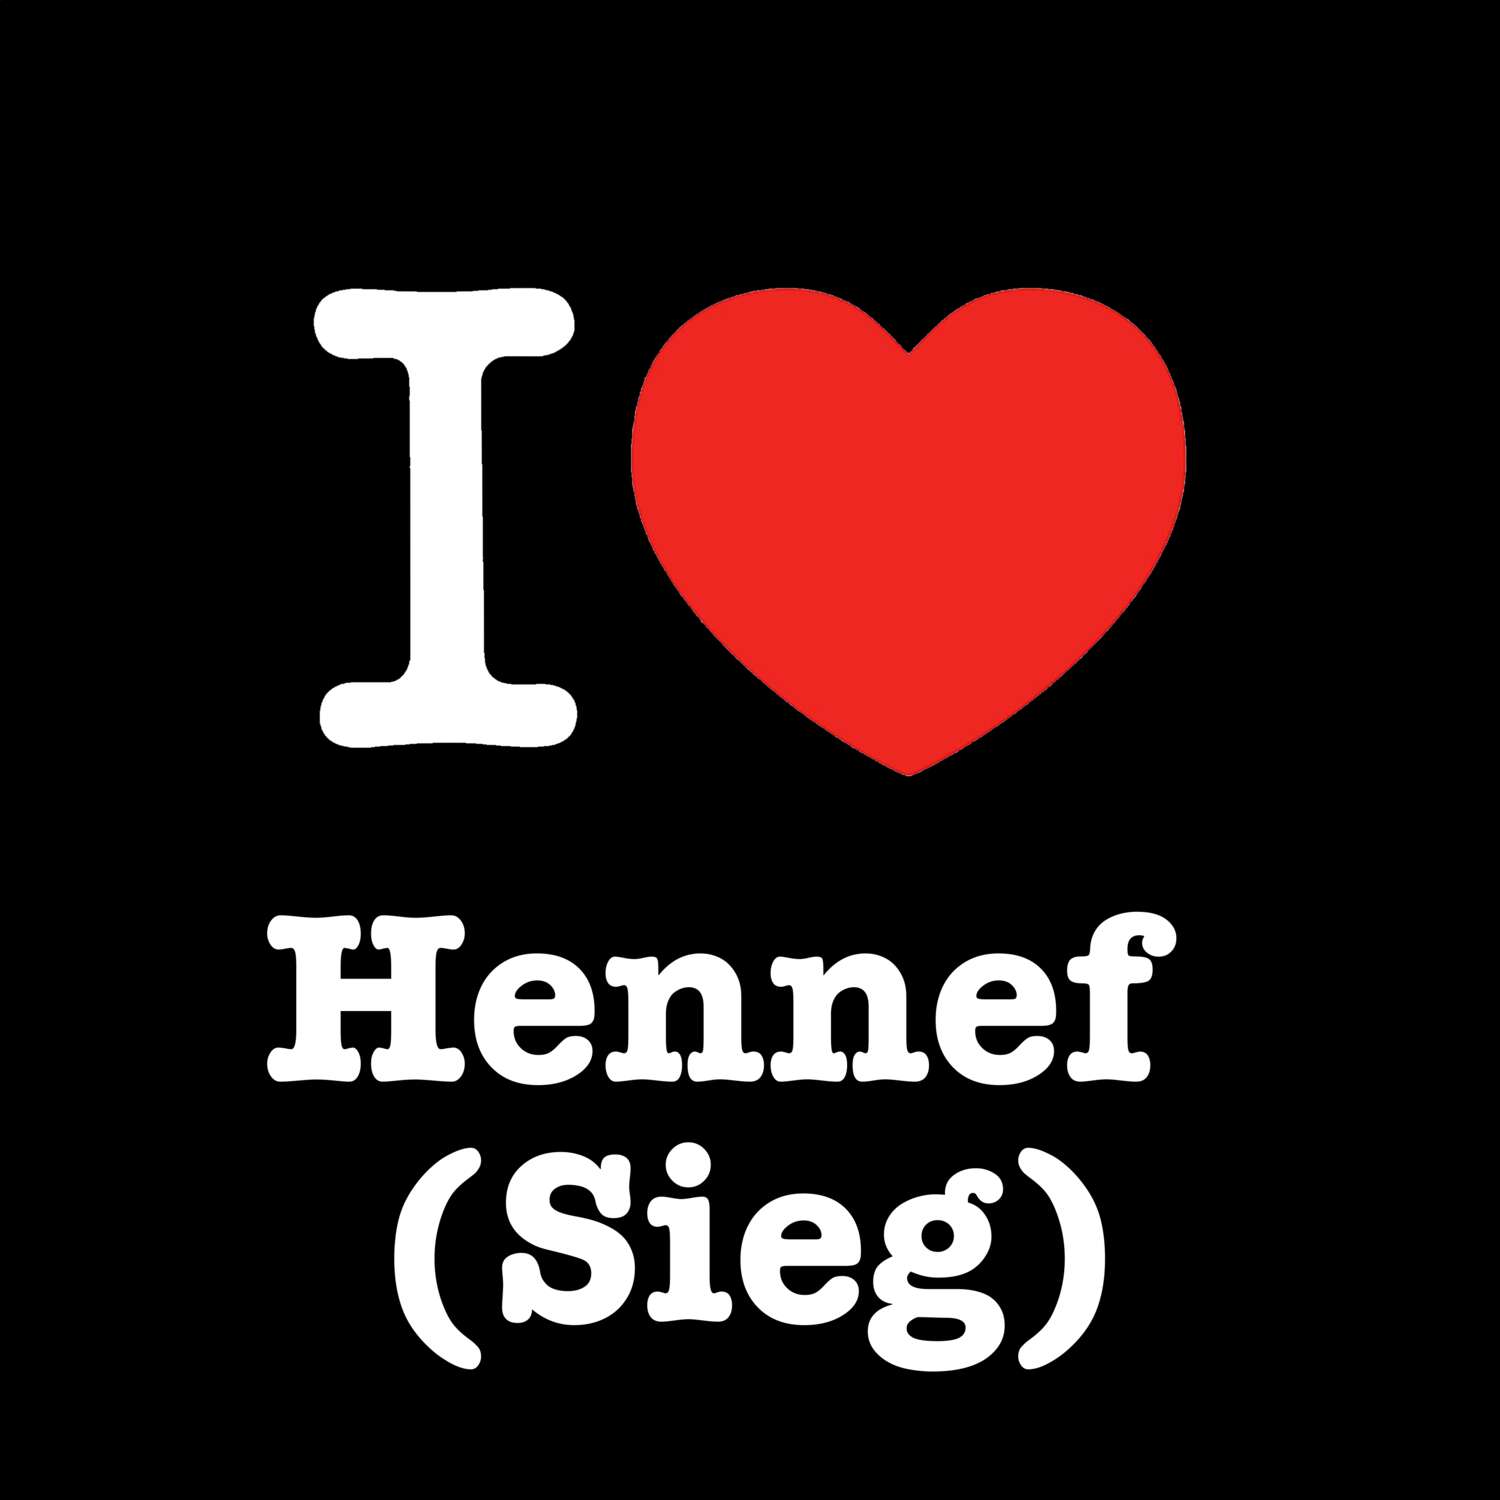 Hennef (Sieg) T-Shirt »I love«